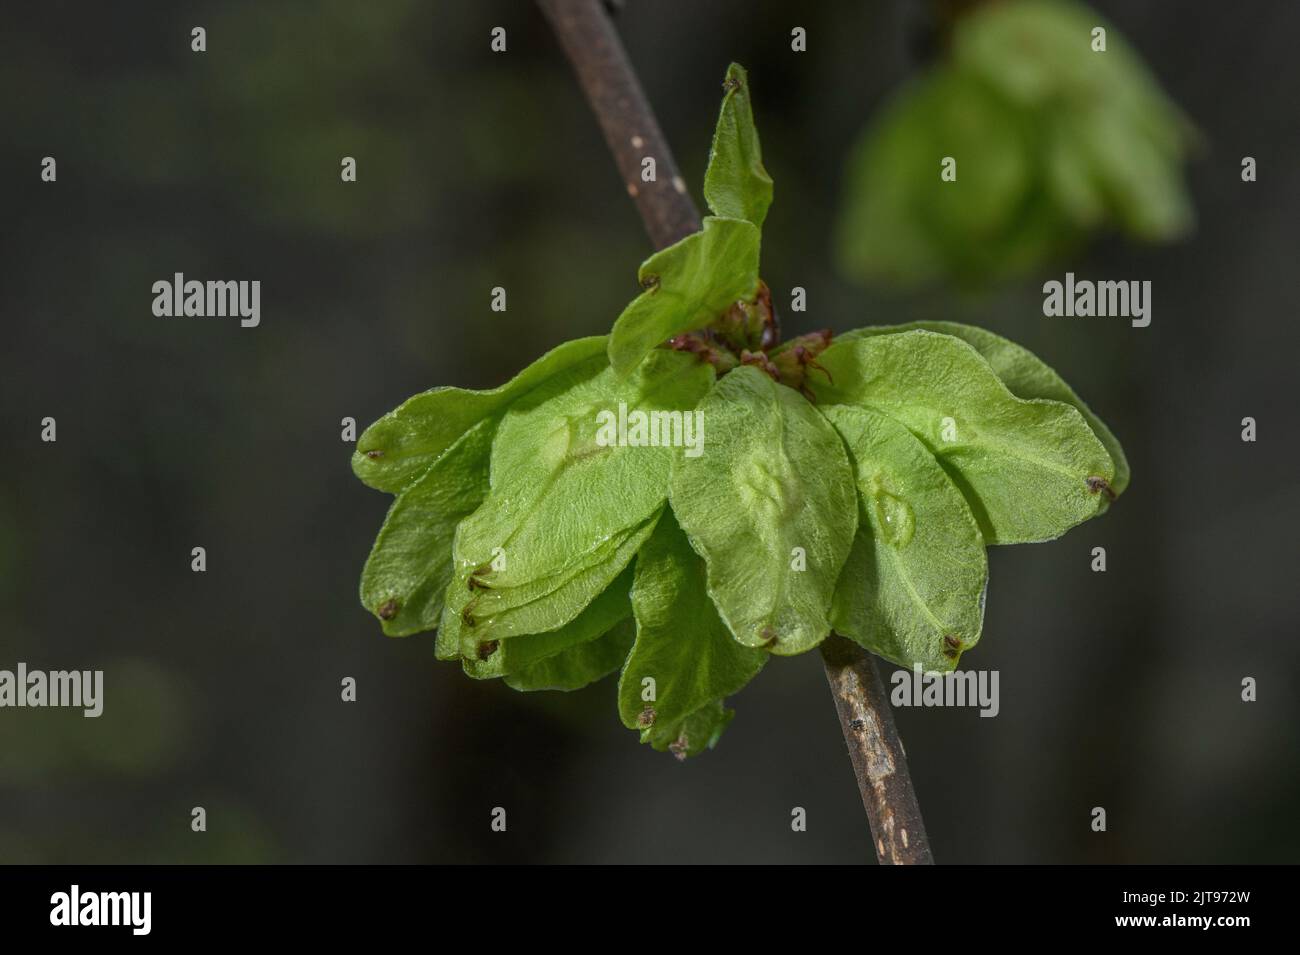 Wych elm, Ulmus glabra, in fruit in early spring. Stock Photo